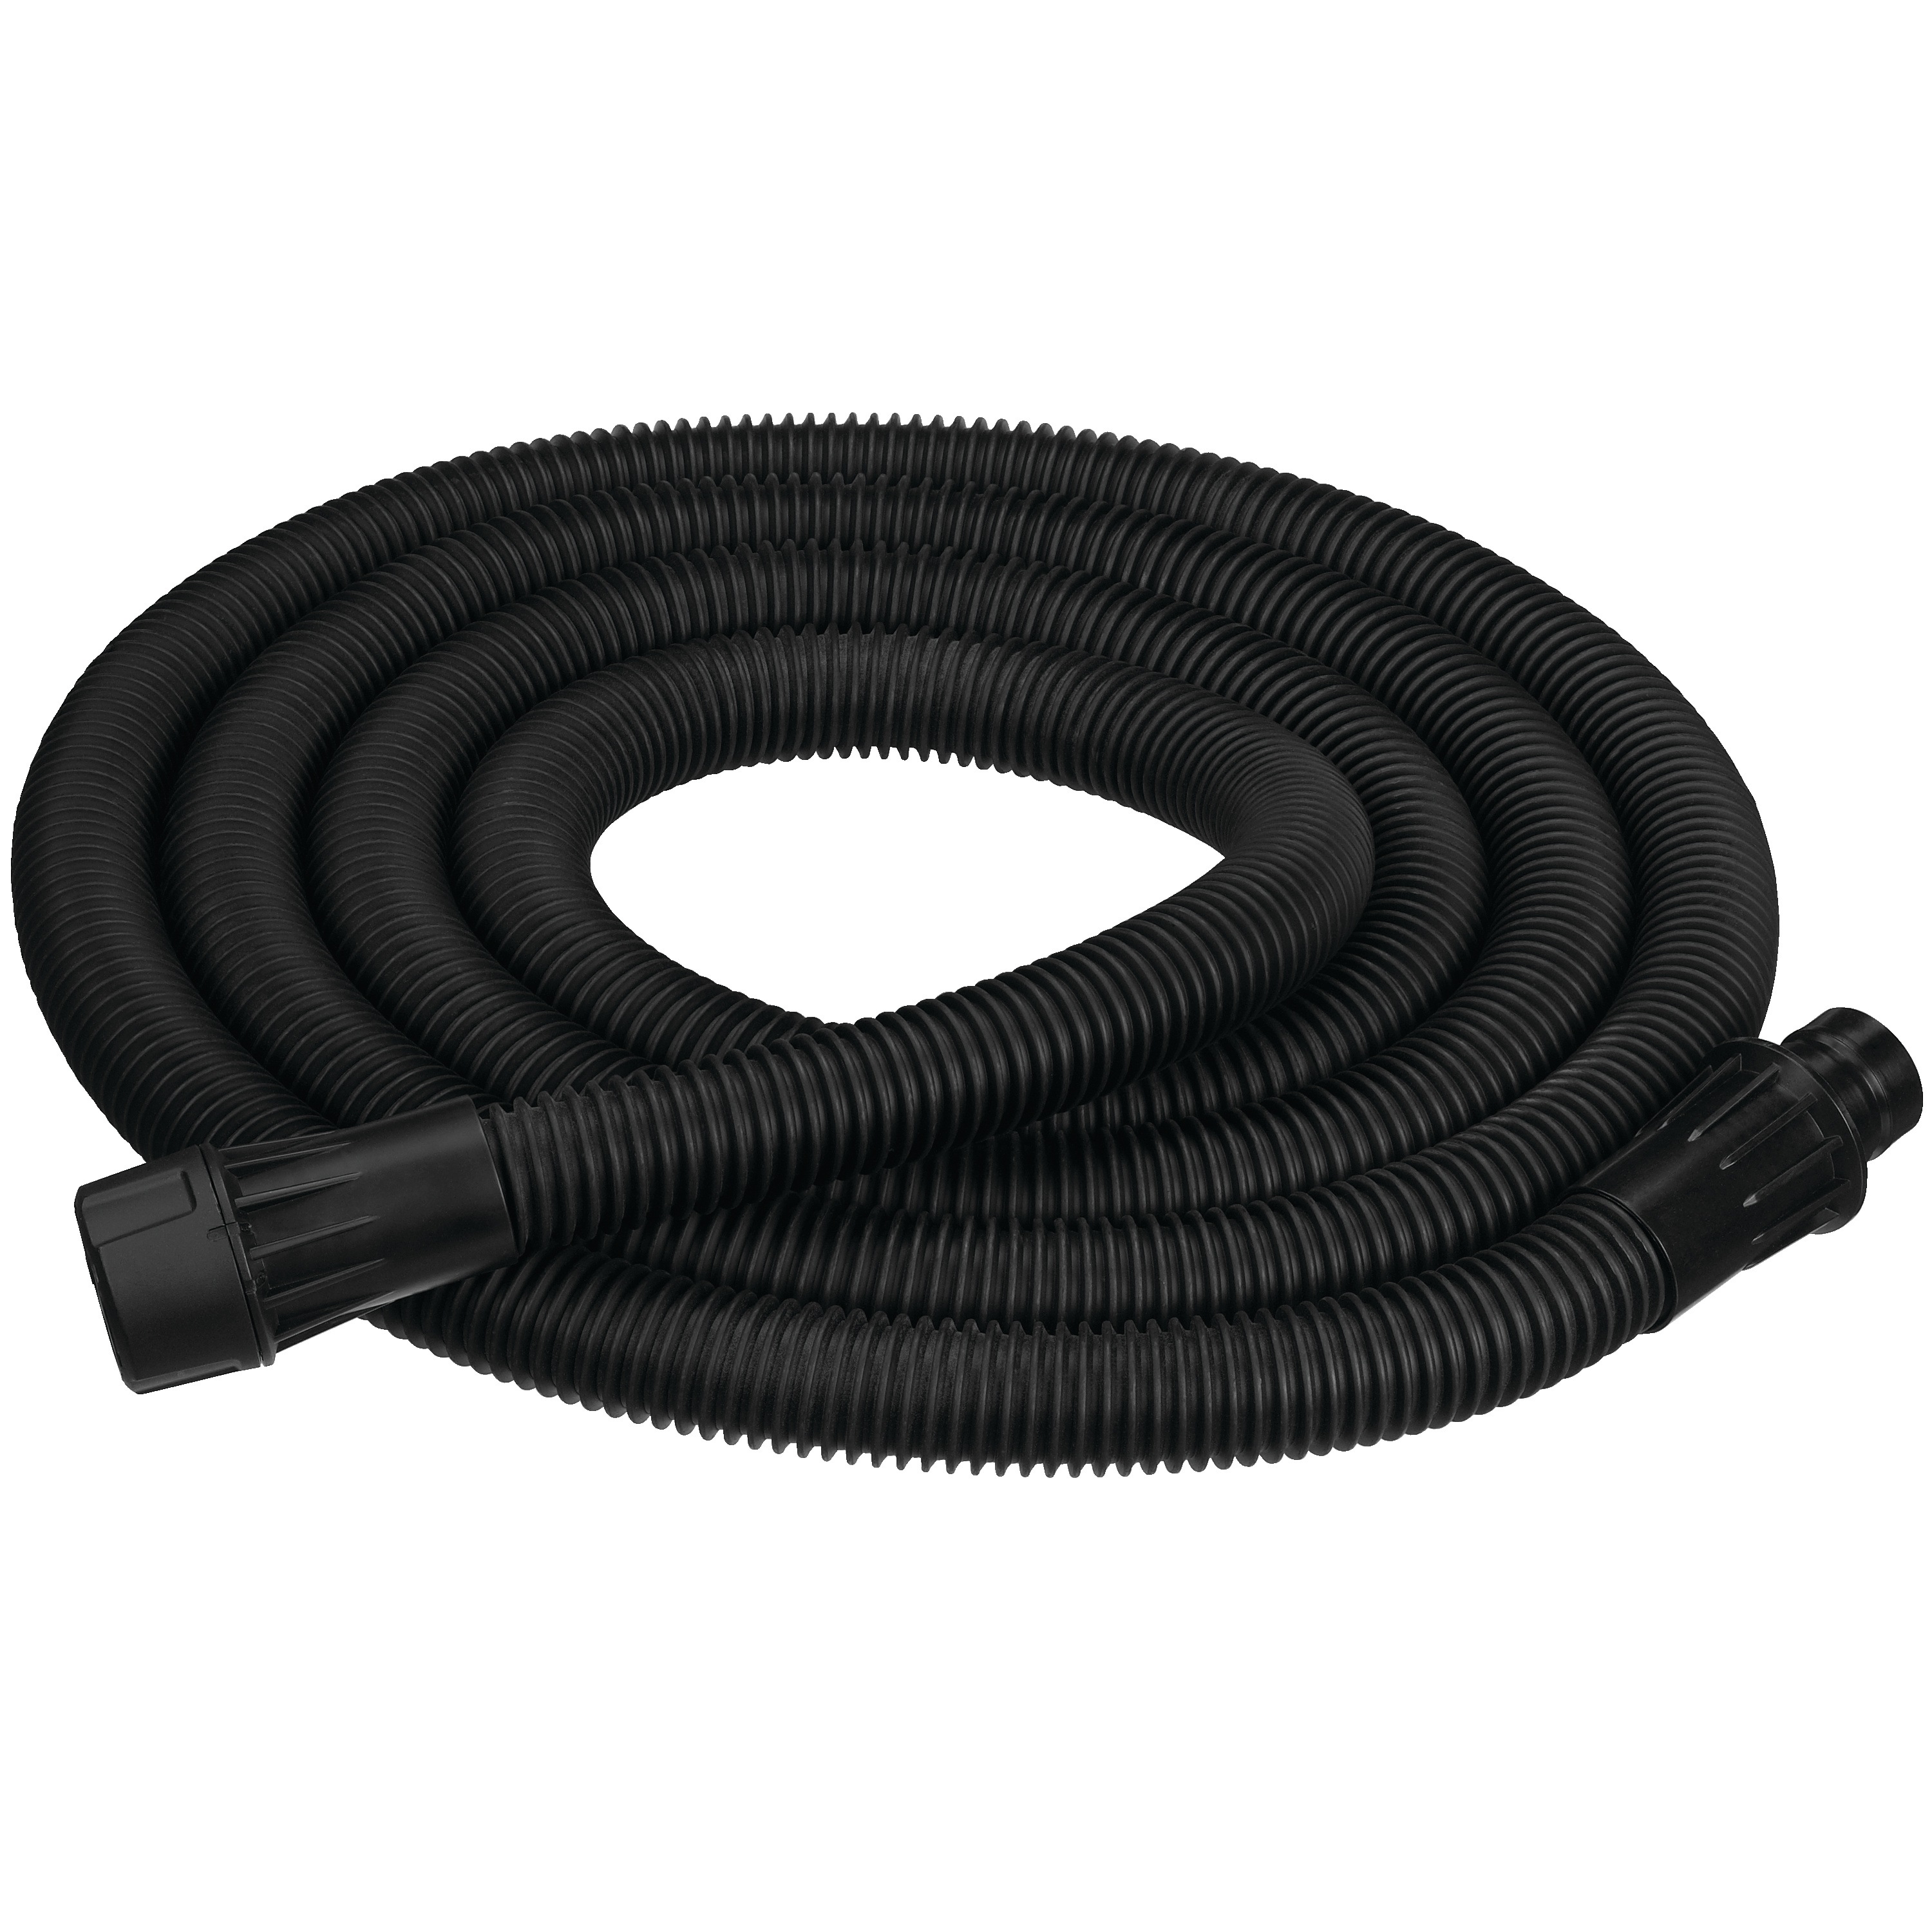 15 inch Anti static hose for DEWALT dust extractors.
